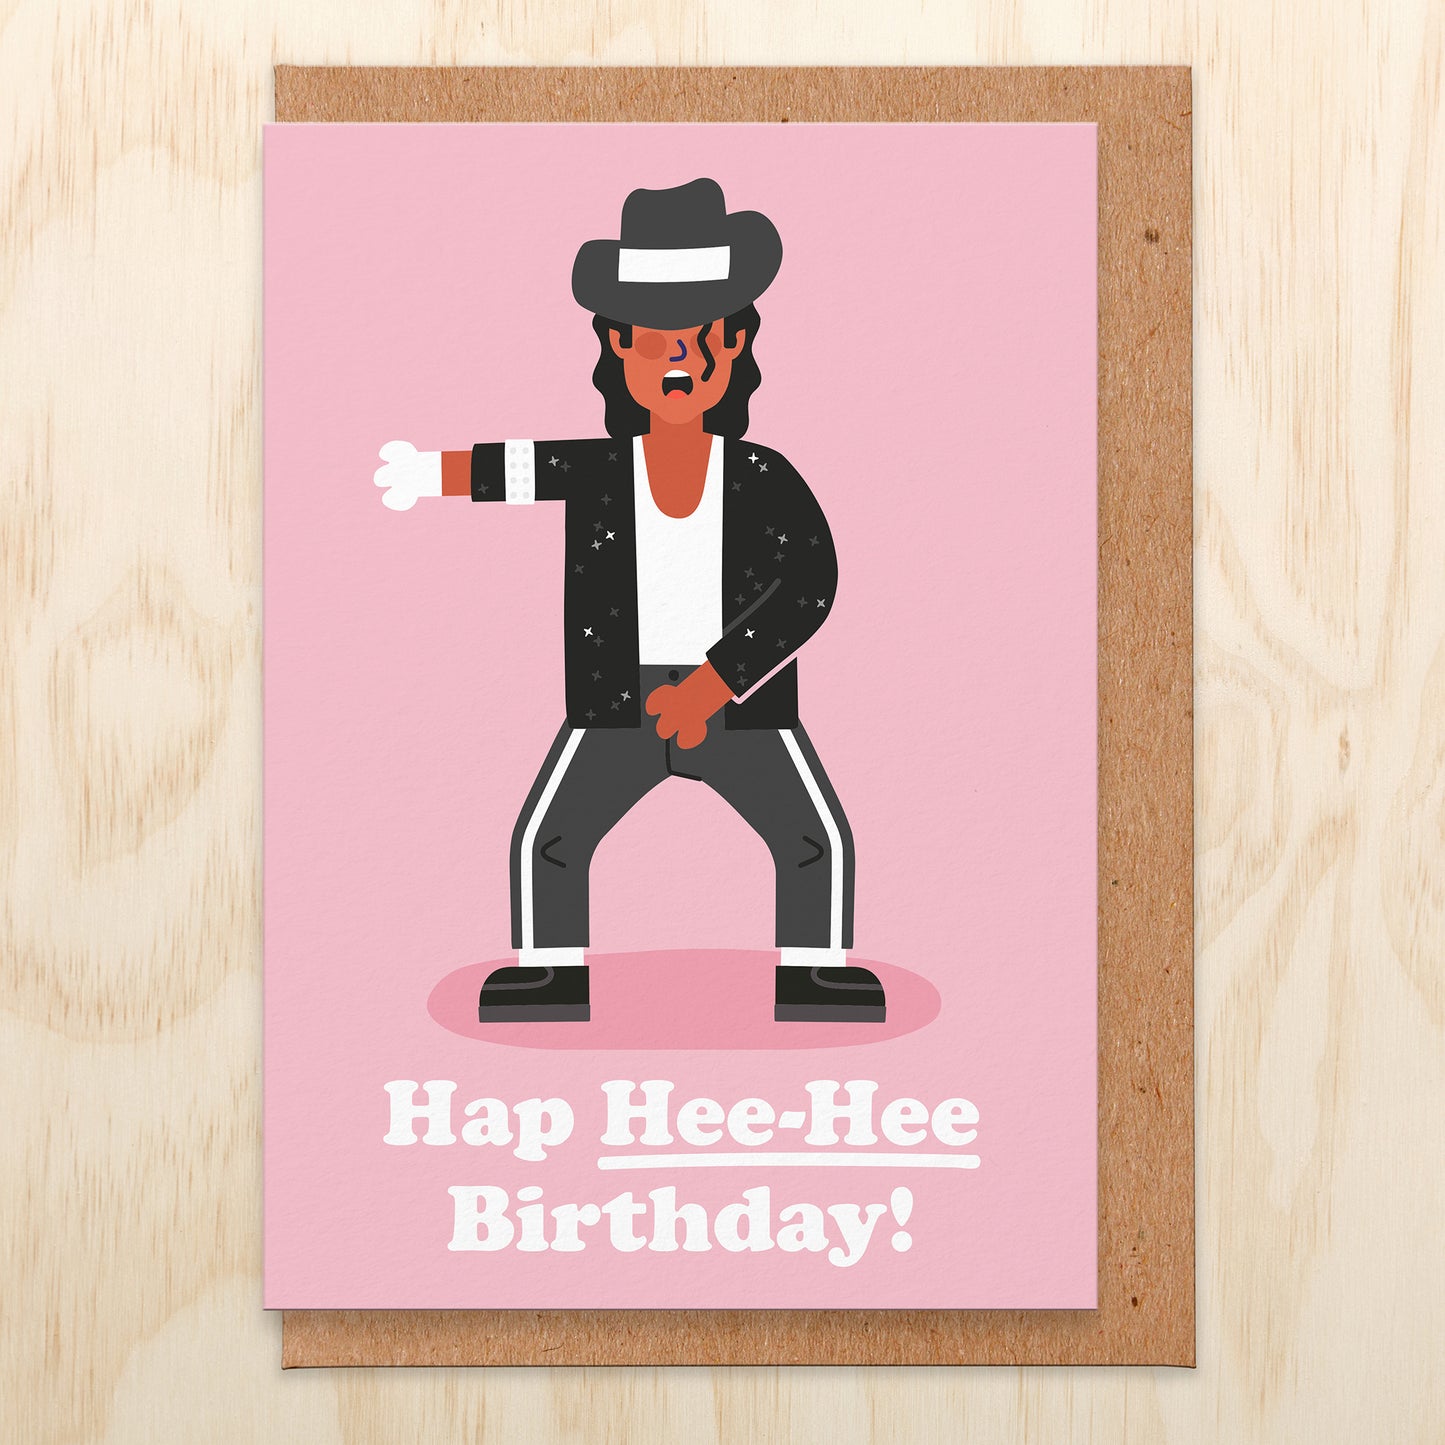 Hap Hee-Hee Birthday - Birthday Card